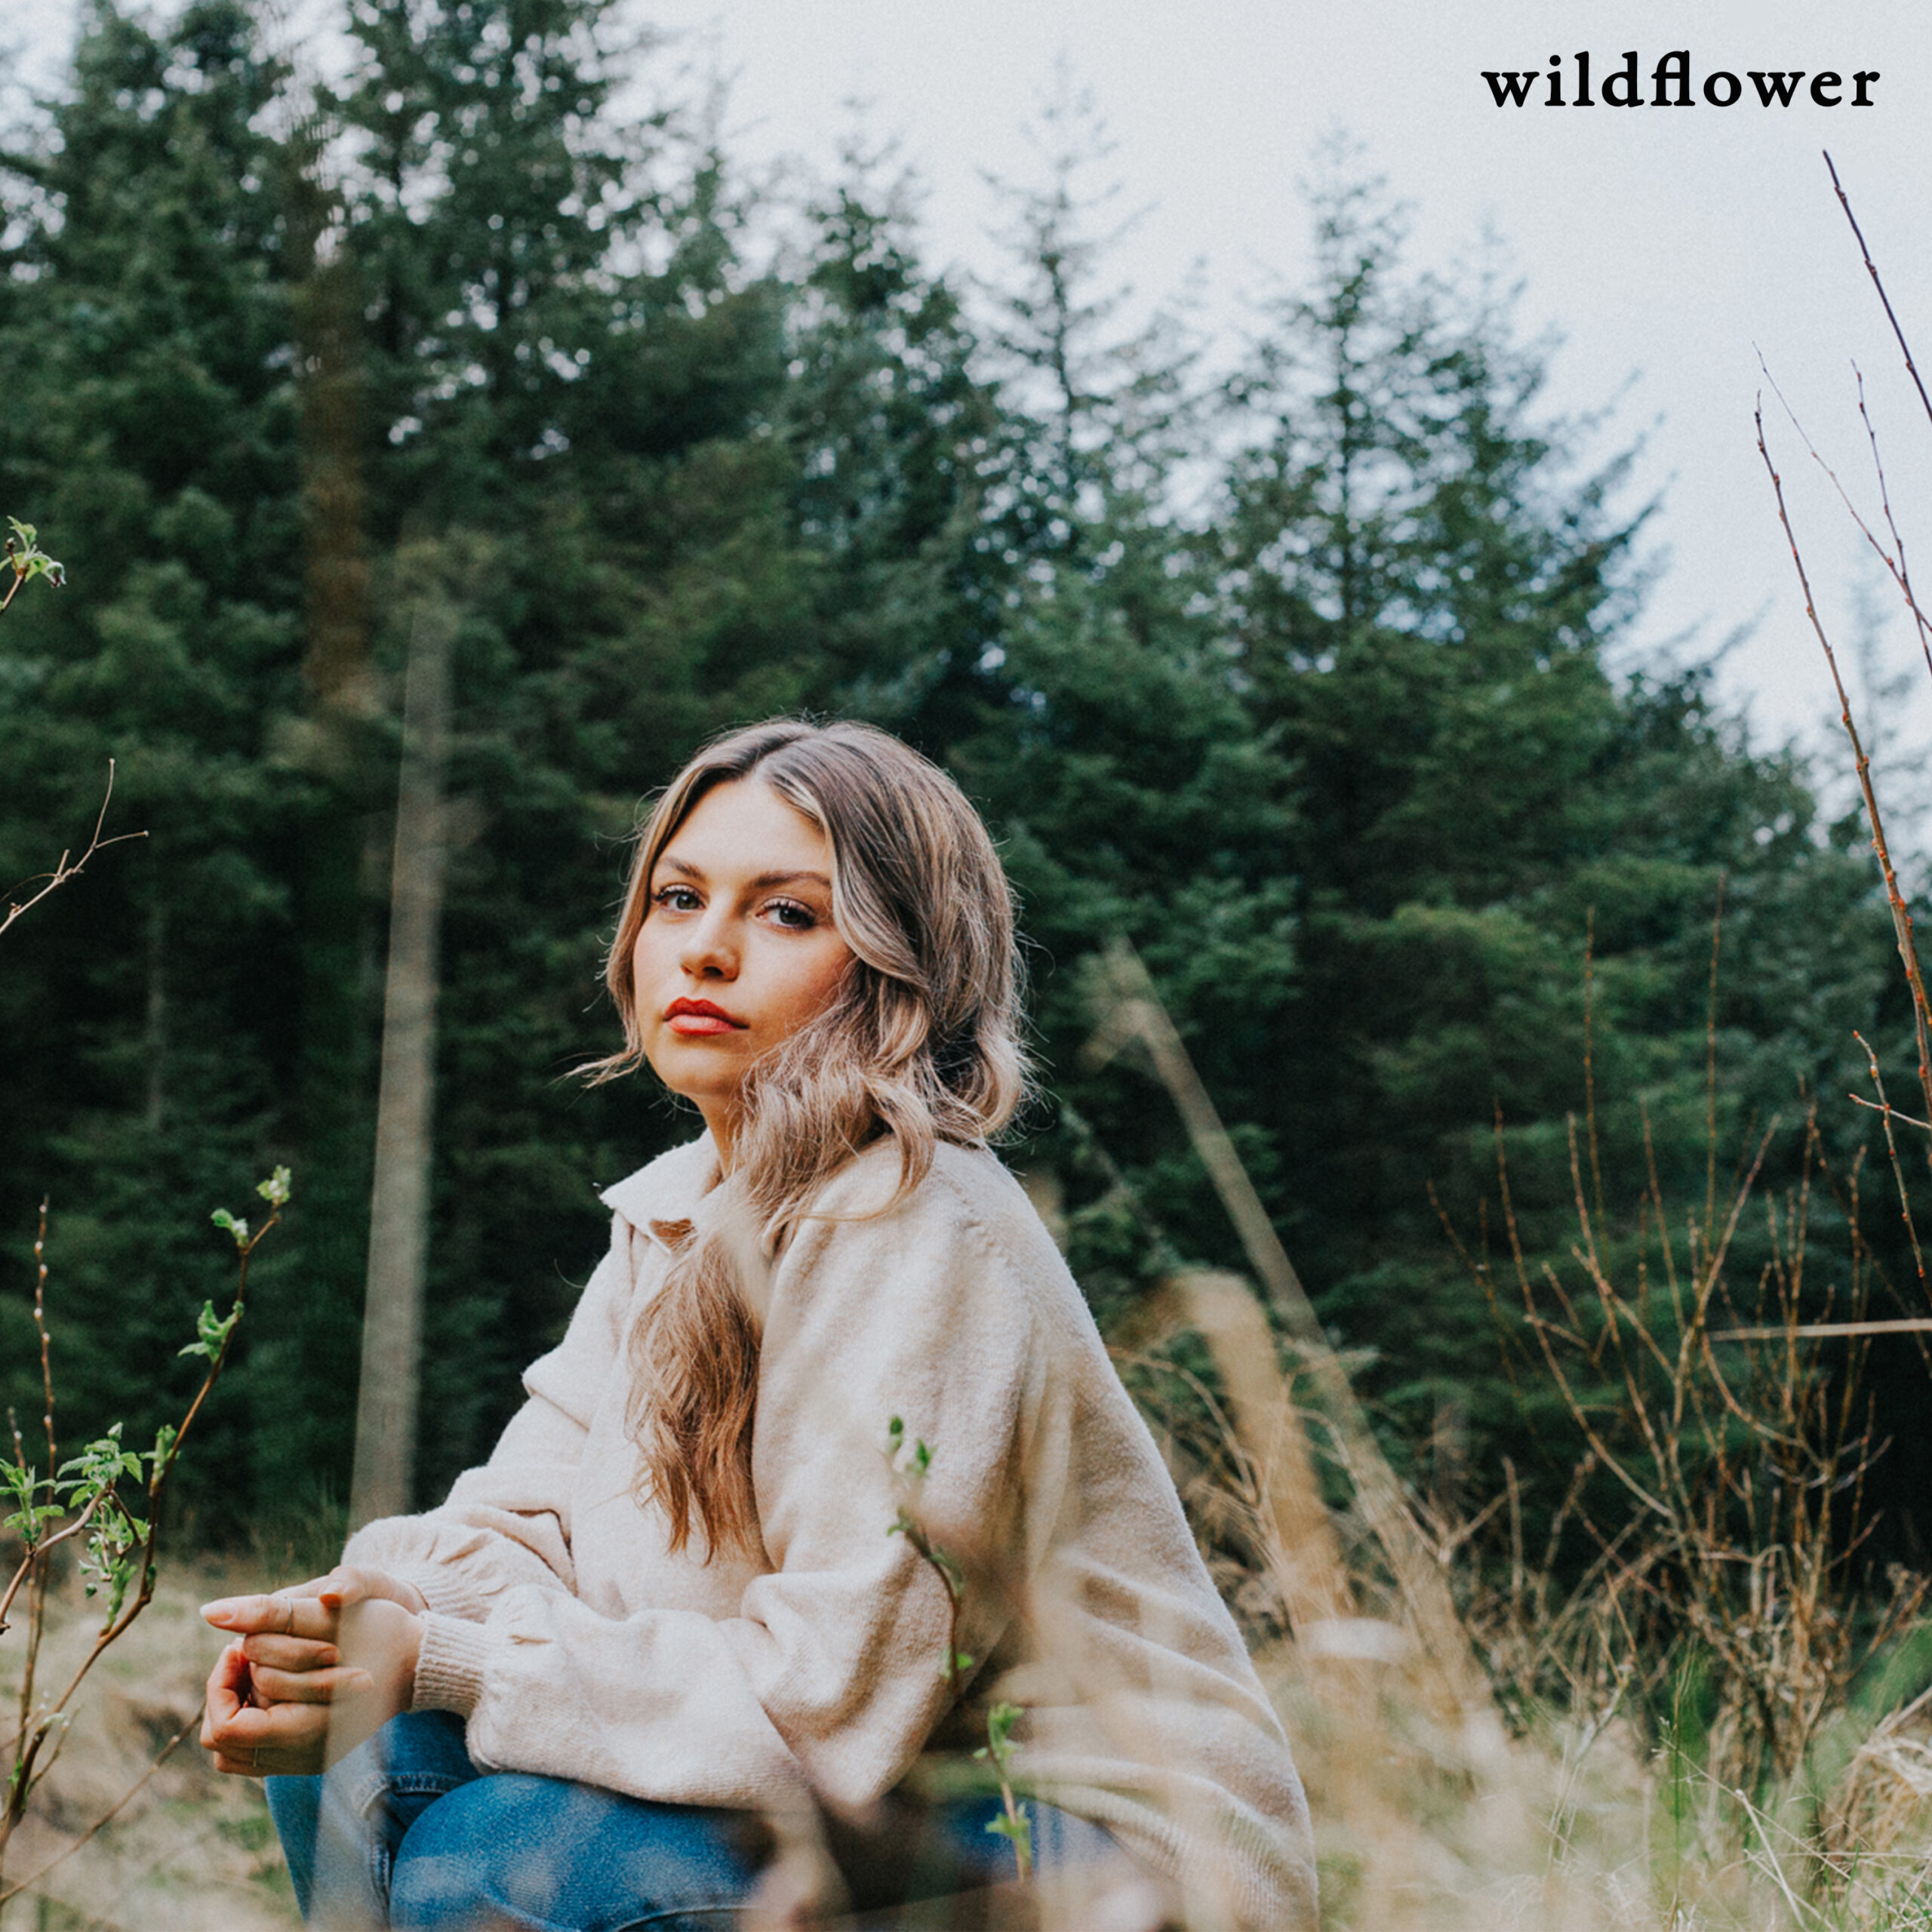 Irish artist REEVAH announces new single ‘wildflower’ - Listen Now! 